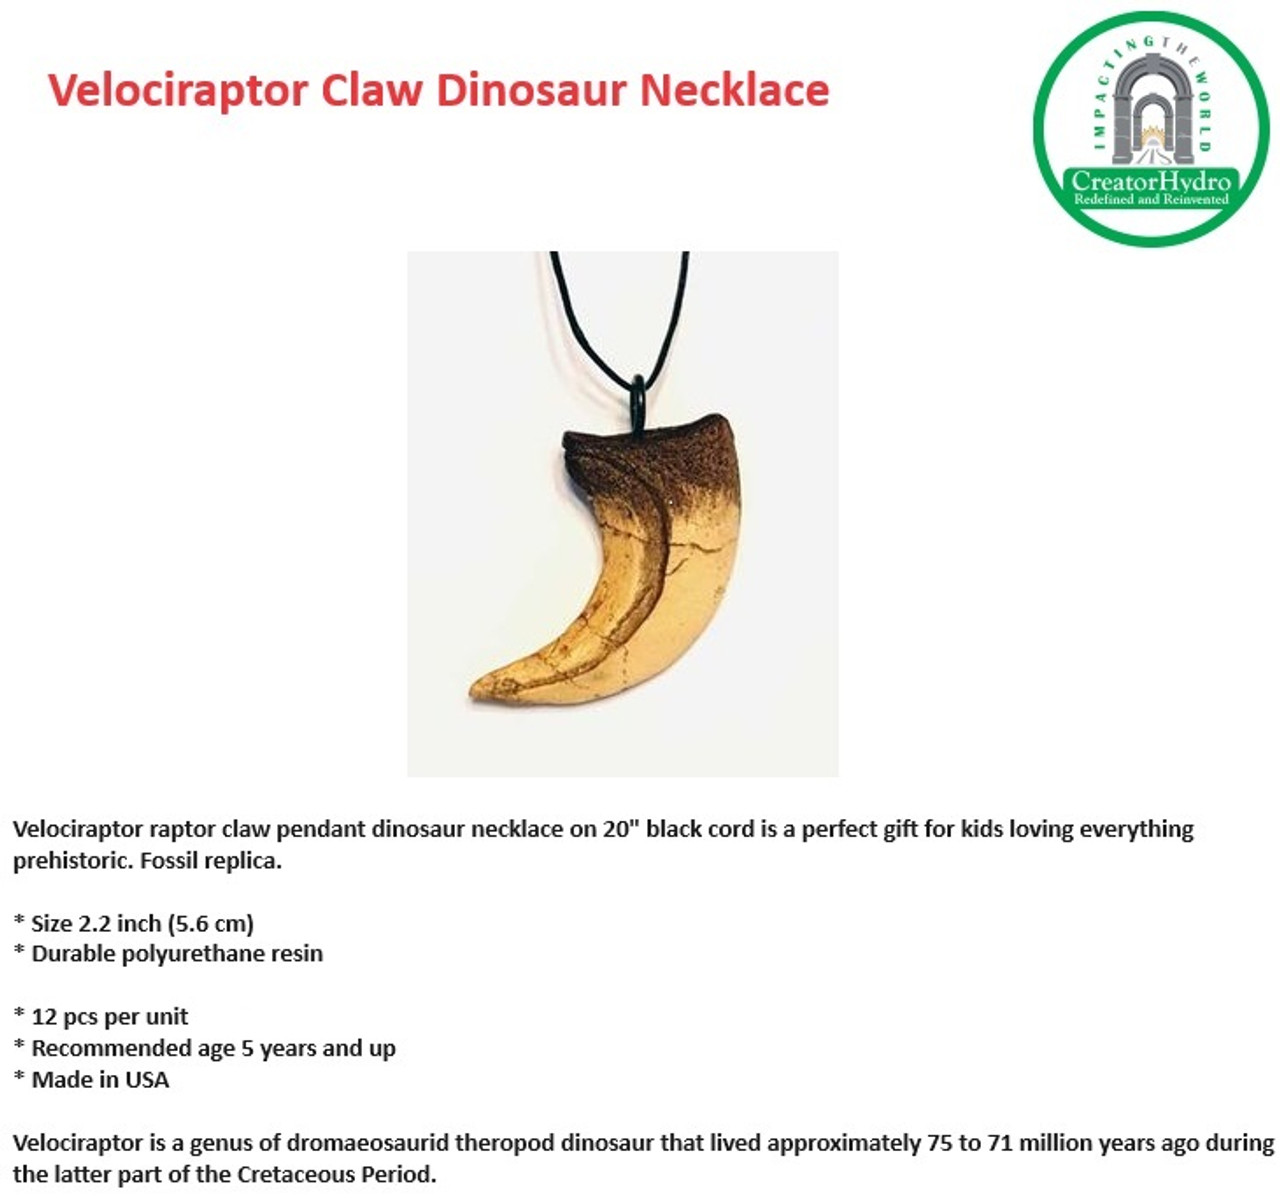 Velociraptor raptor claw pendant dinosaur necklace | Size 2.2 inch |Fossil replica 